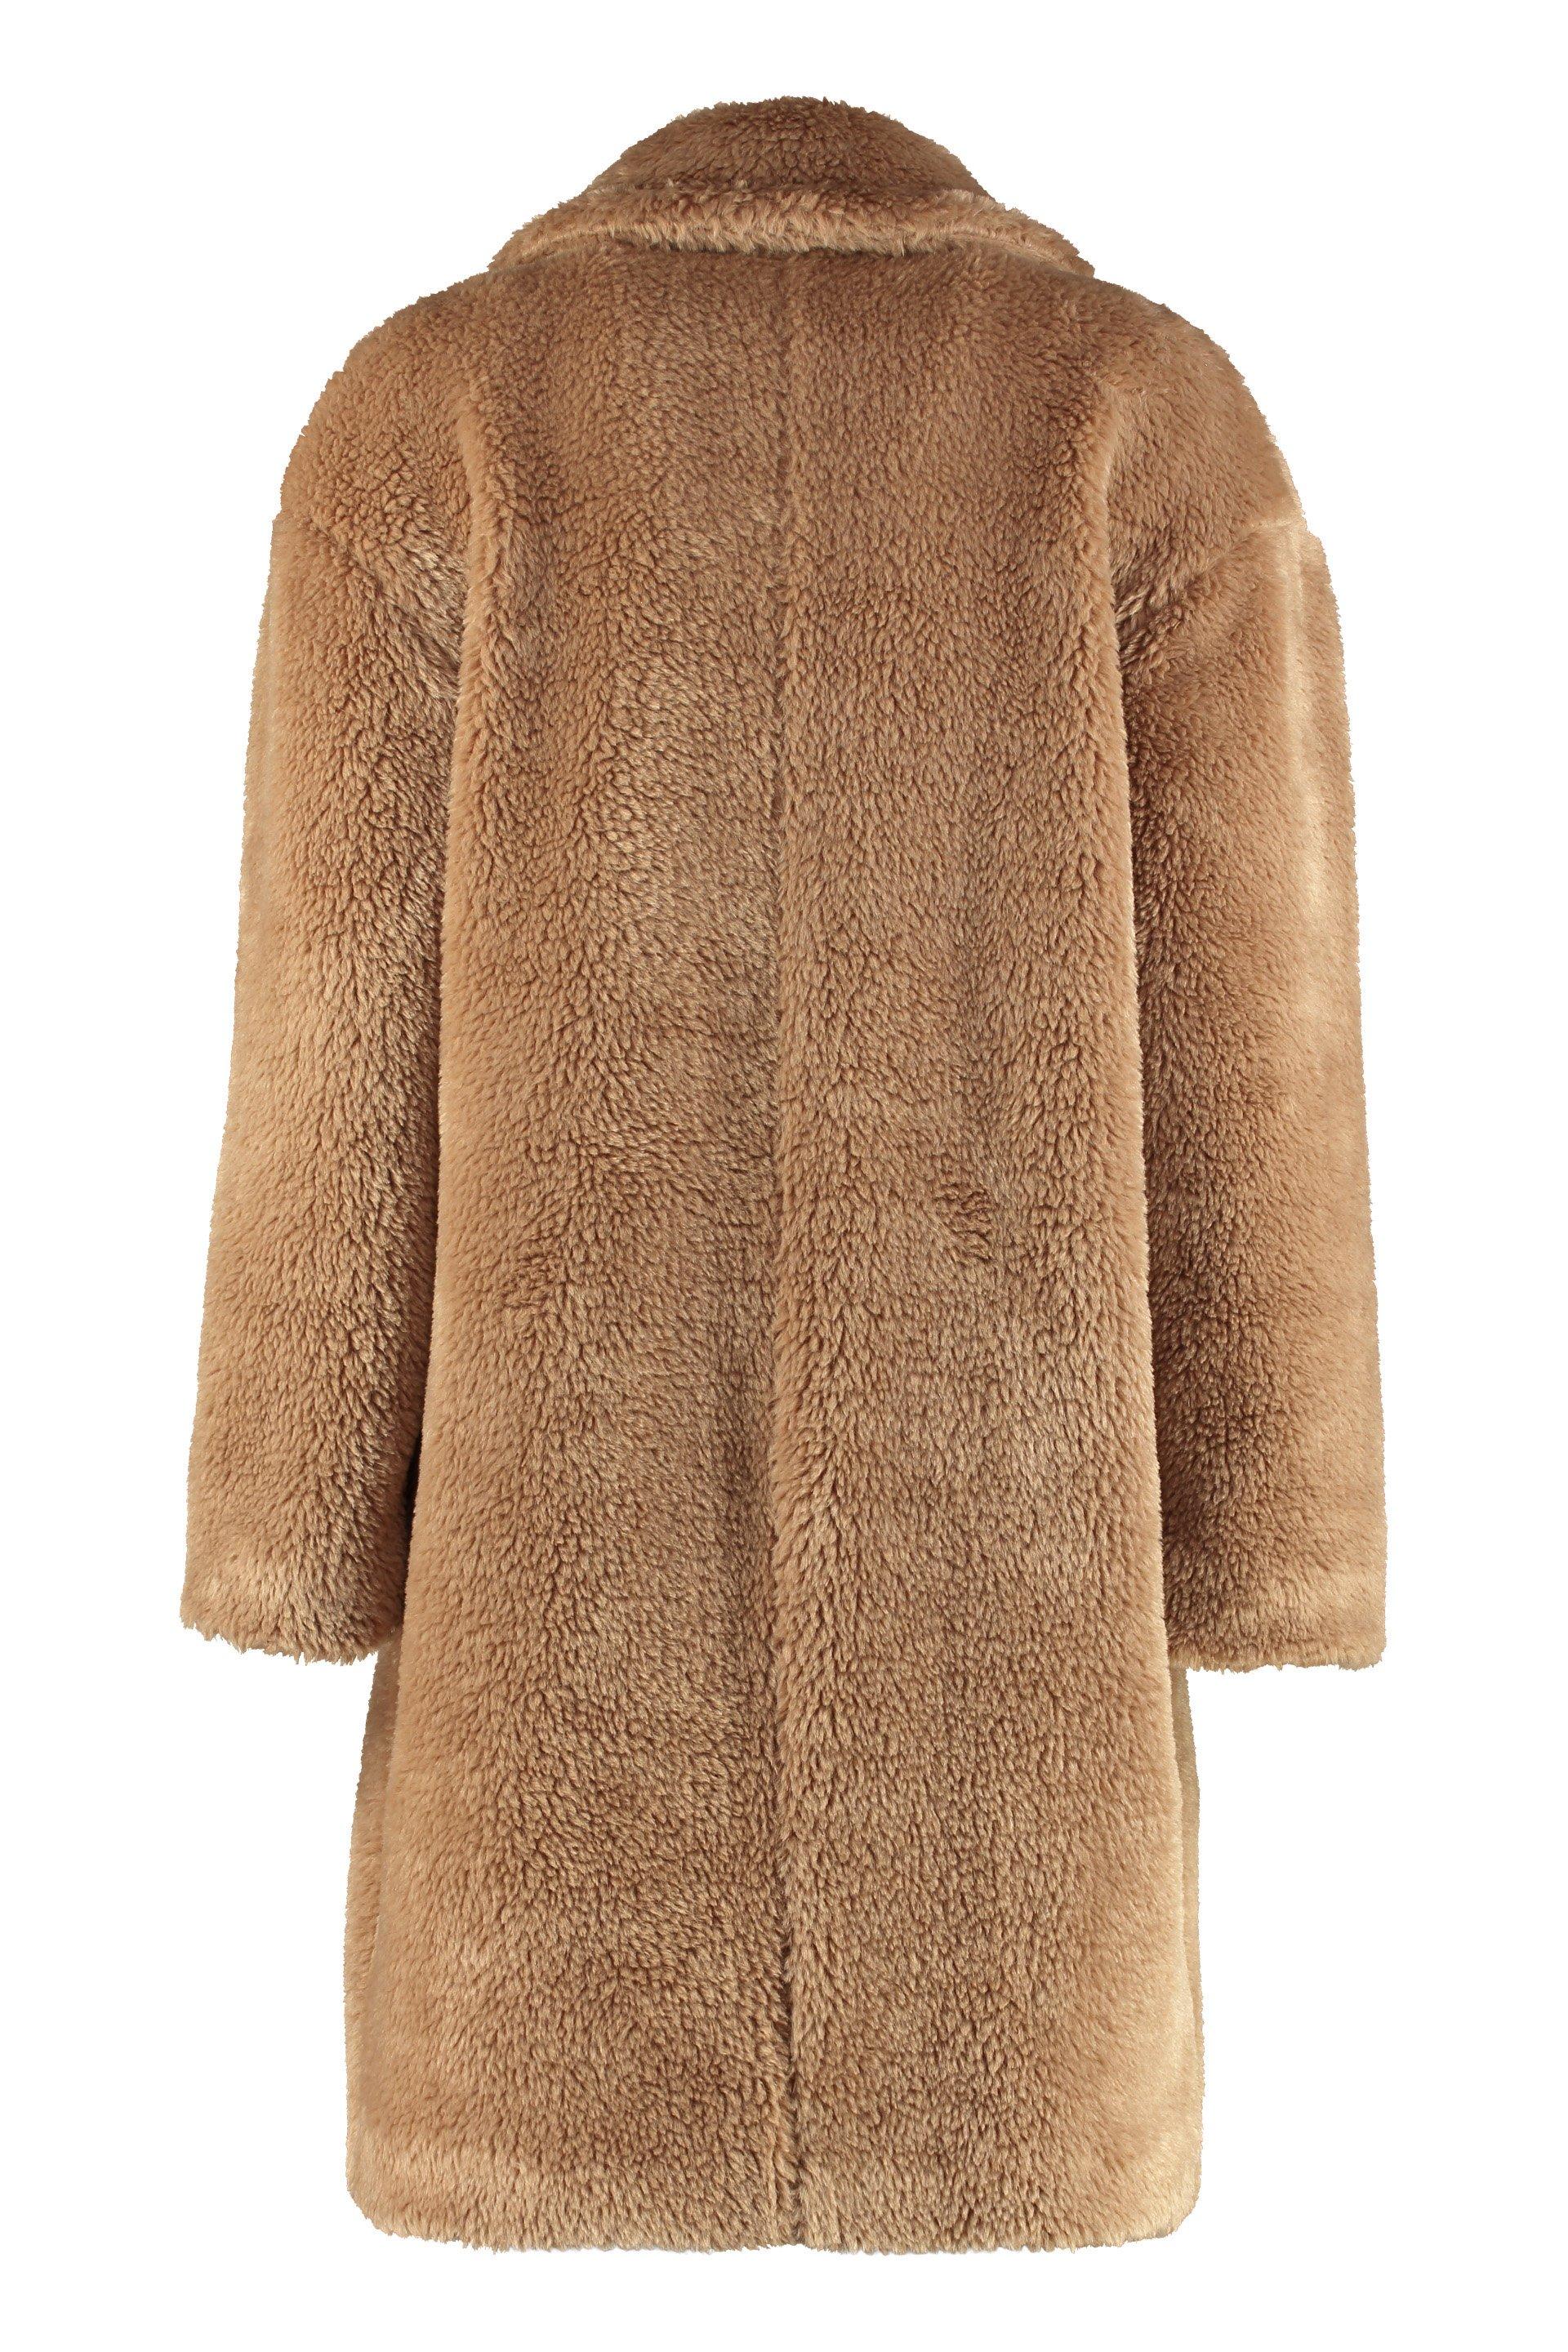 MICHAEL Michael Kors Oversized Teddy Coat in Brown | Lyst